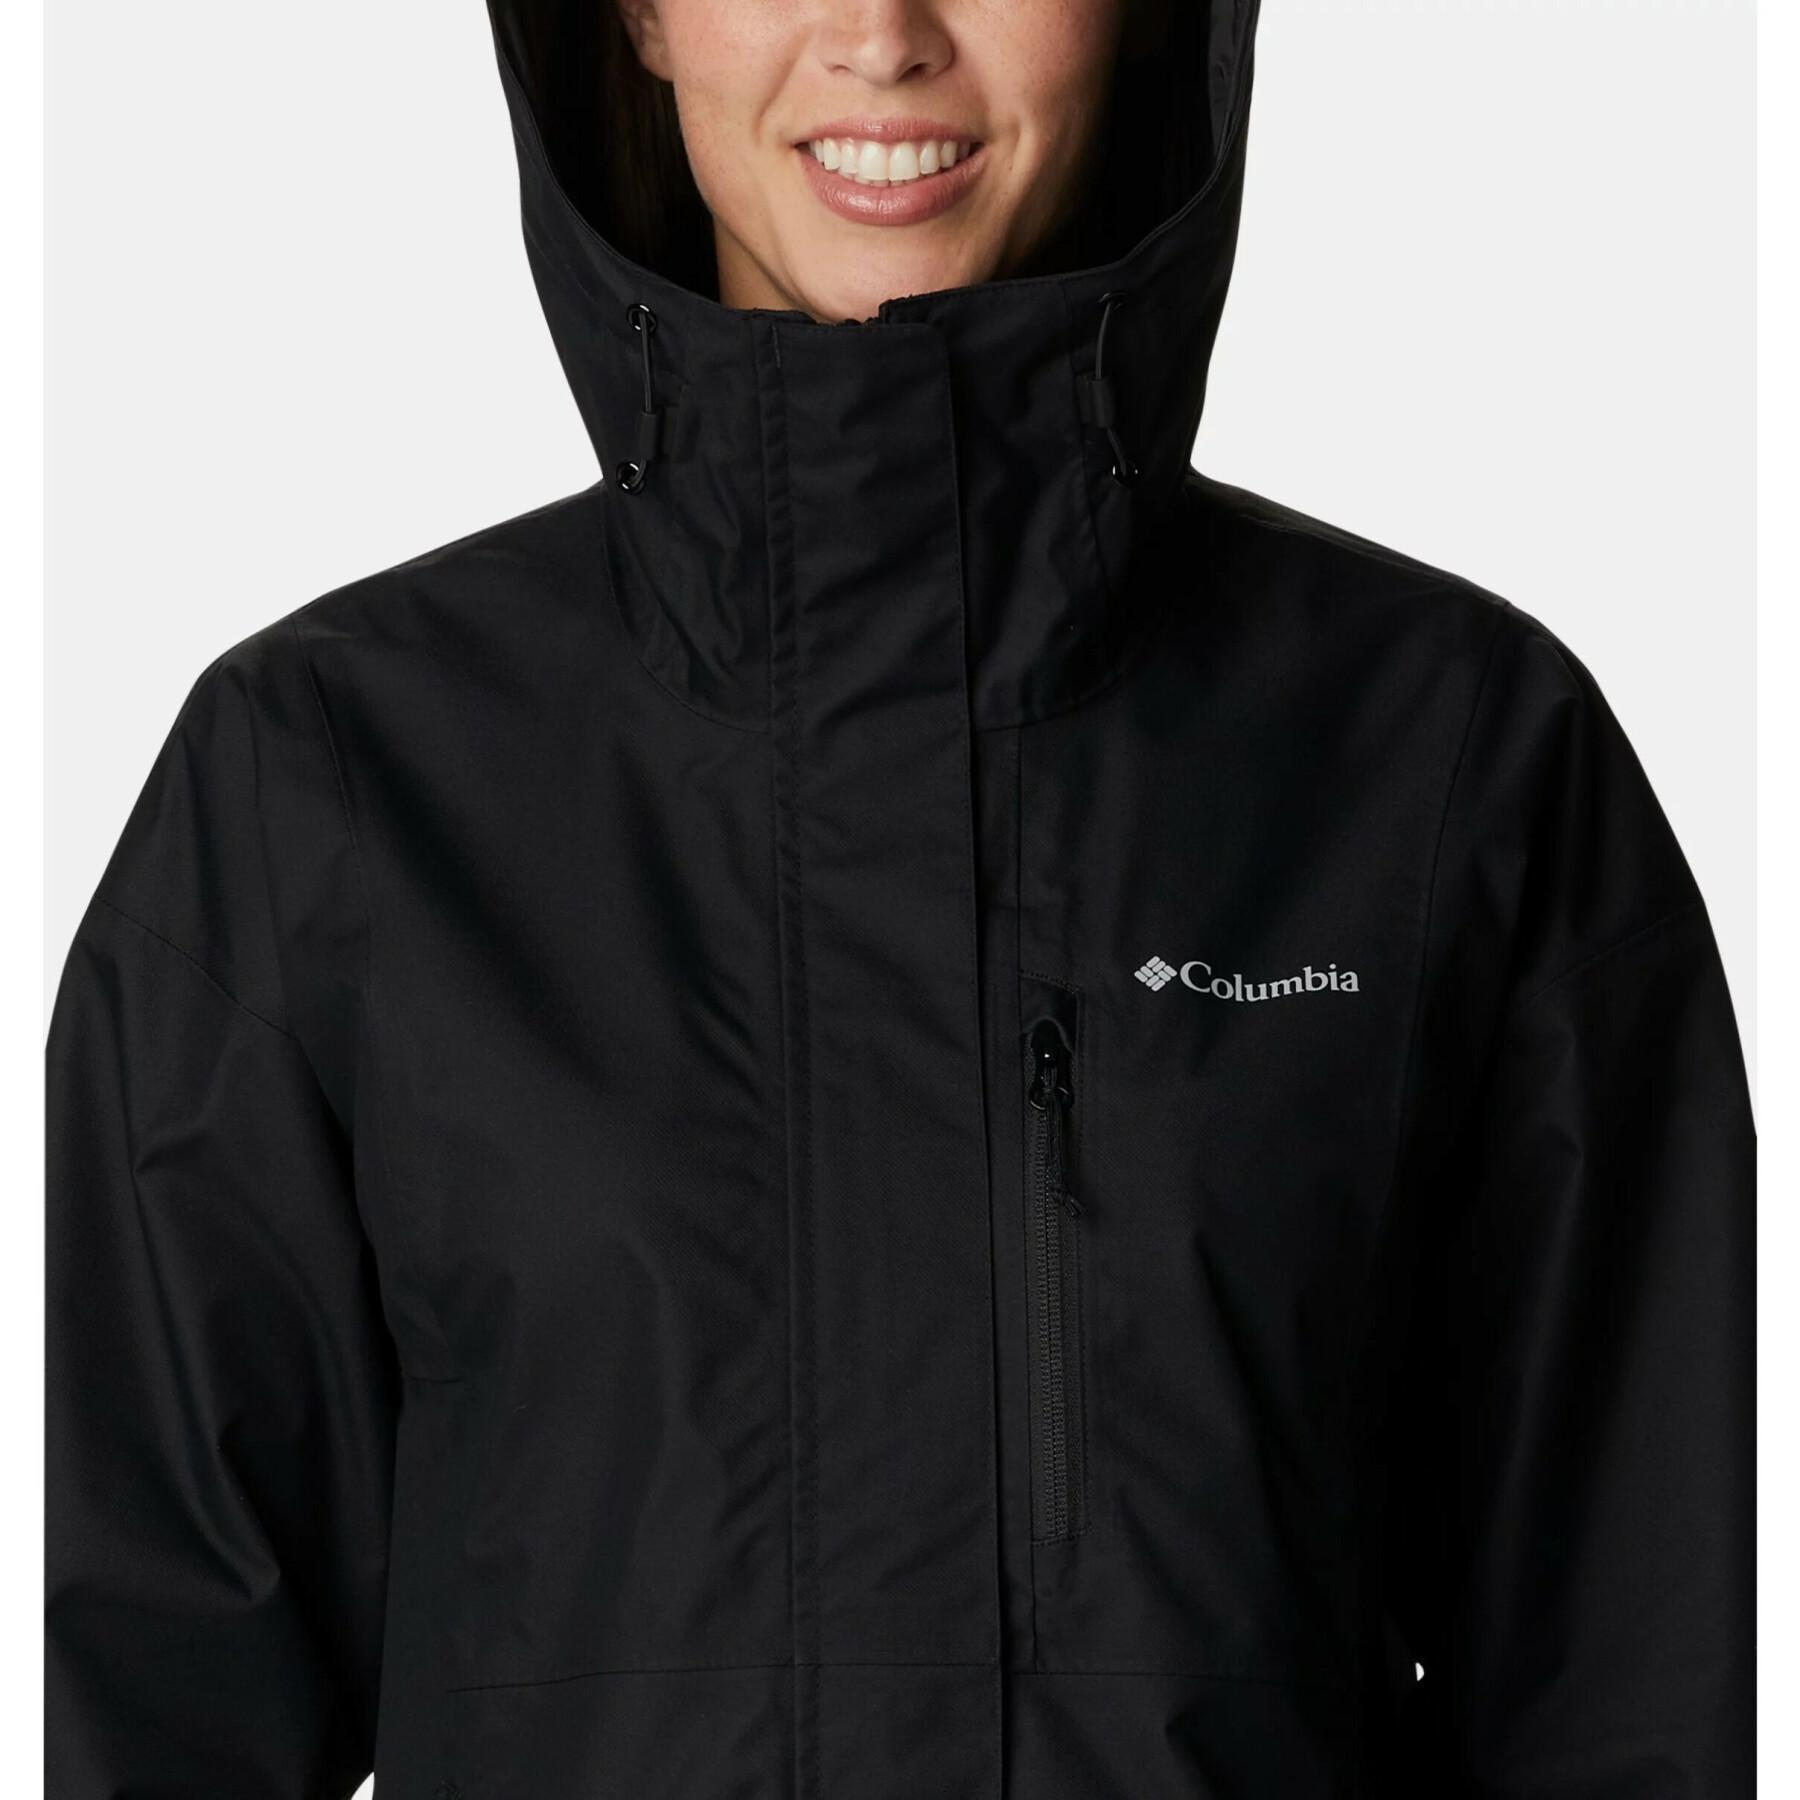 Women's jacket Columbia Hikebound